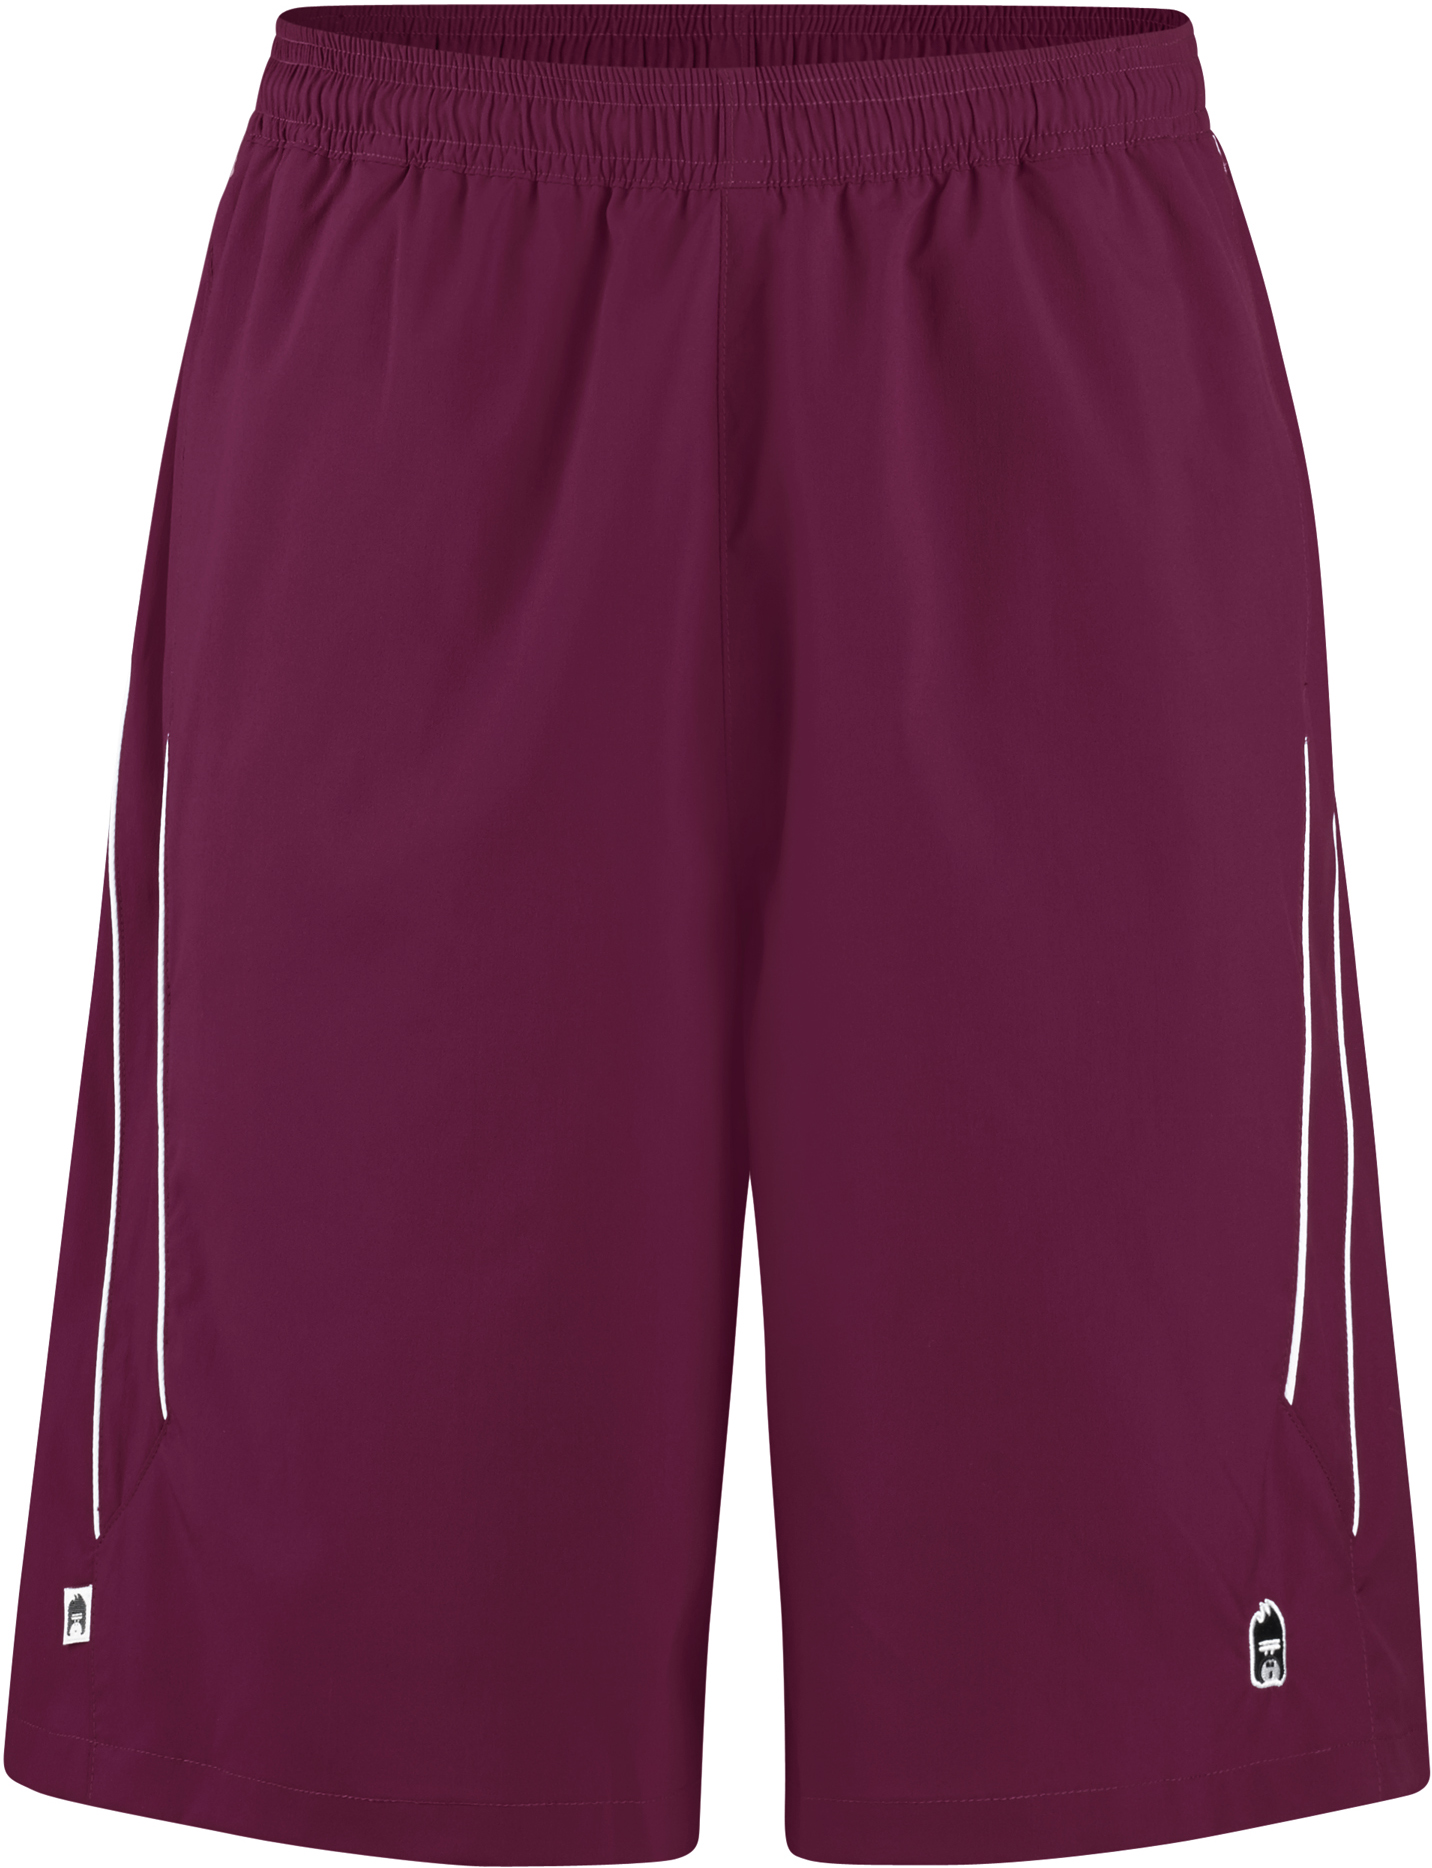 DUC Dyno Men&amp;apos;s Tennis Shorts (Maroon)